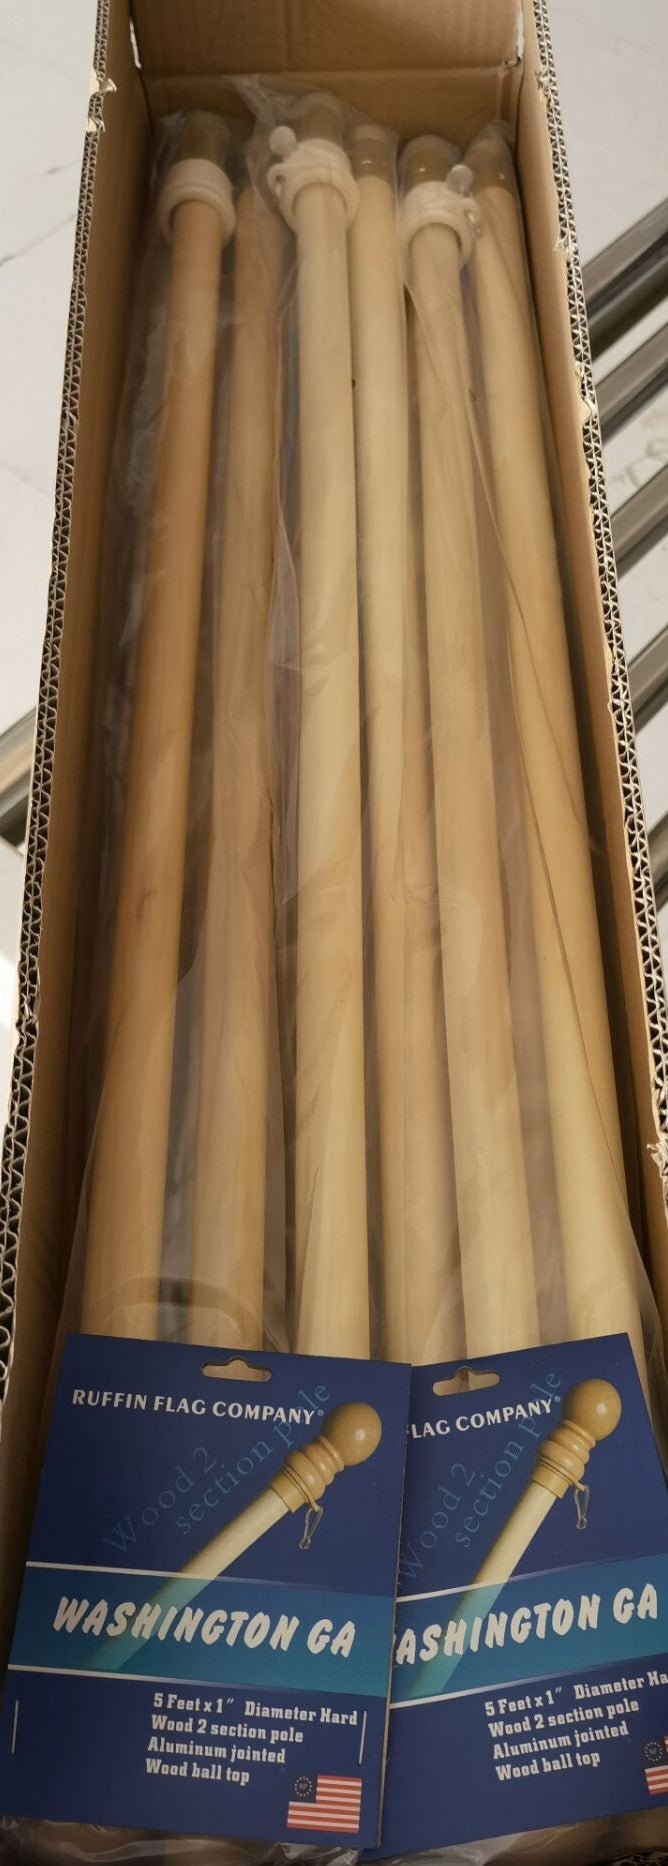 Wooden 2 piece flagpoles 5' x 1" Diameter non furl clips